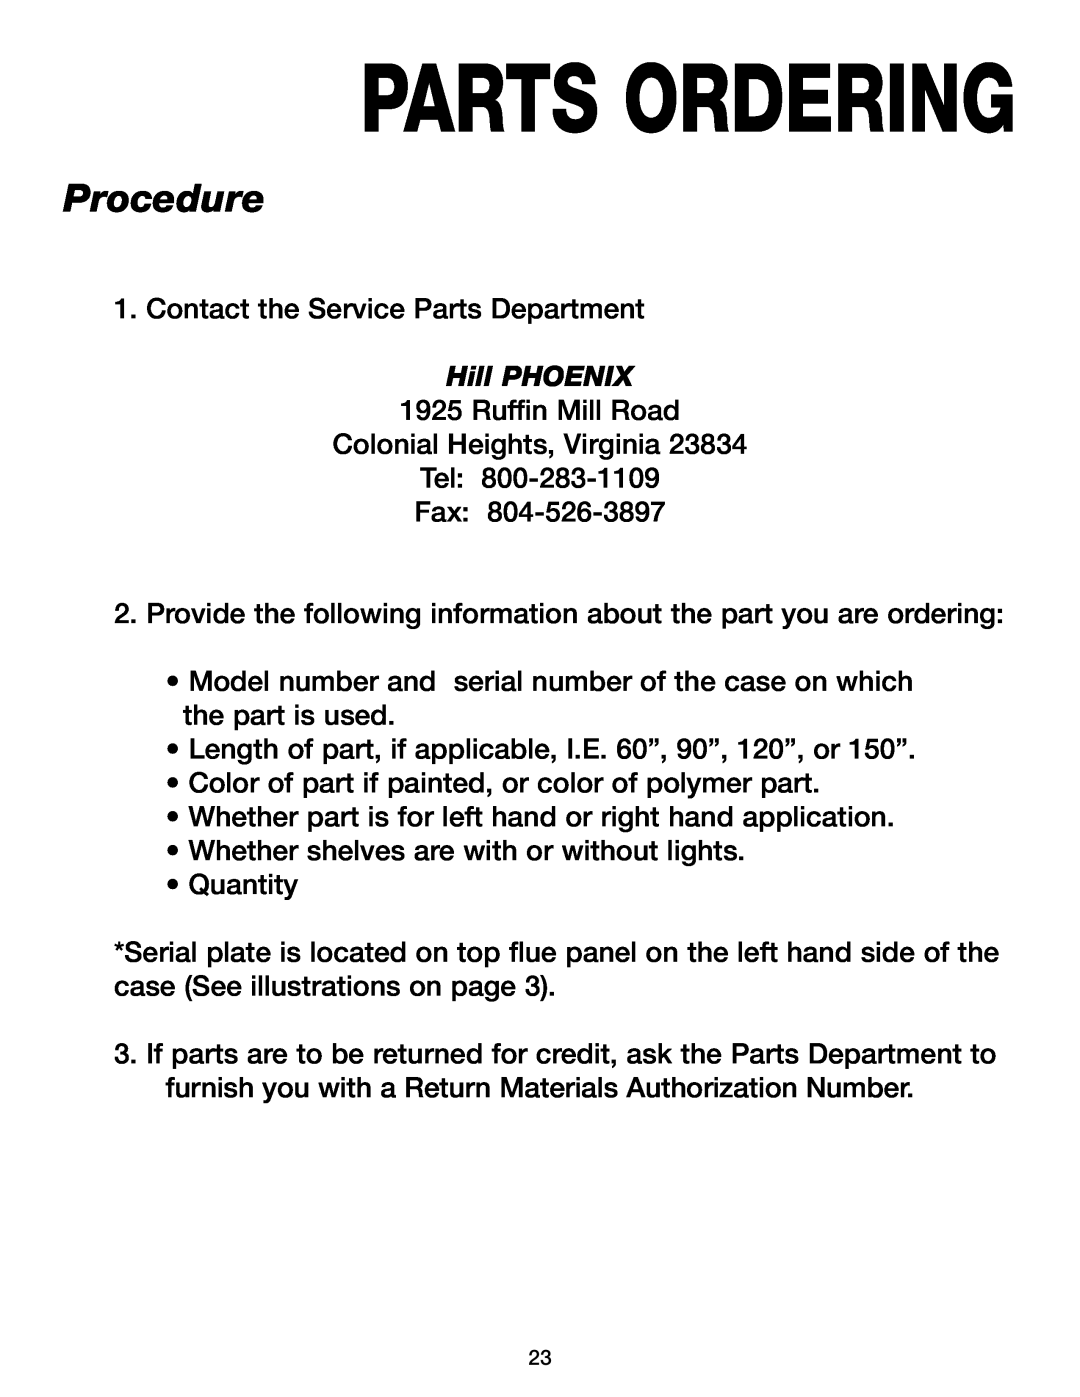 Hill Phoenix KRZH manual Parts Ordering, Procedure, Hill PHOENIX 